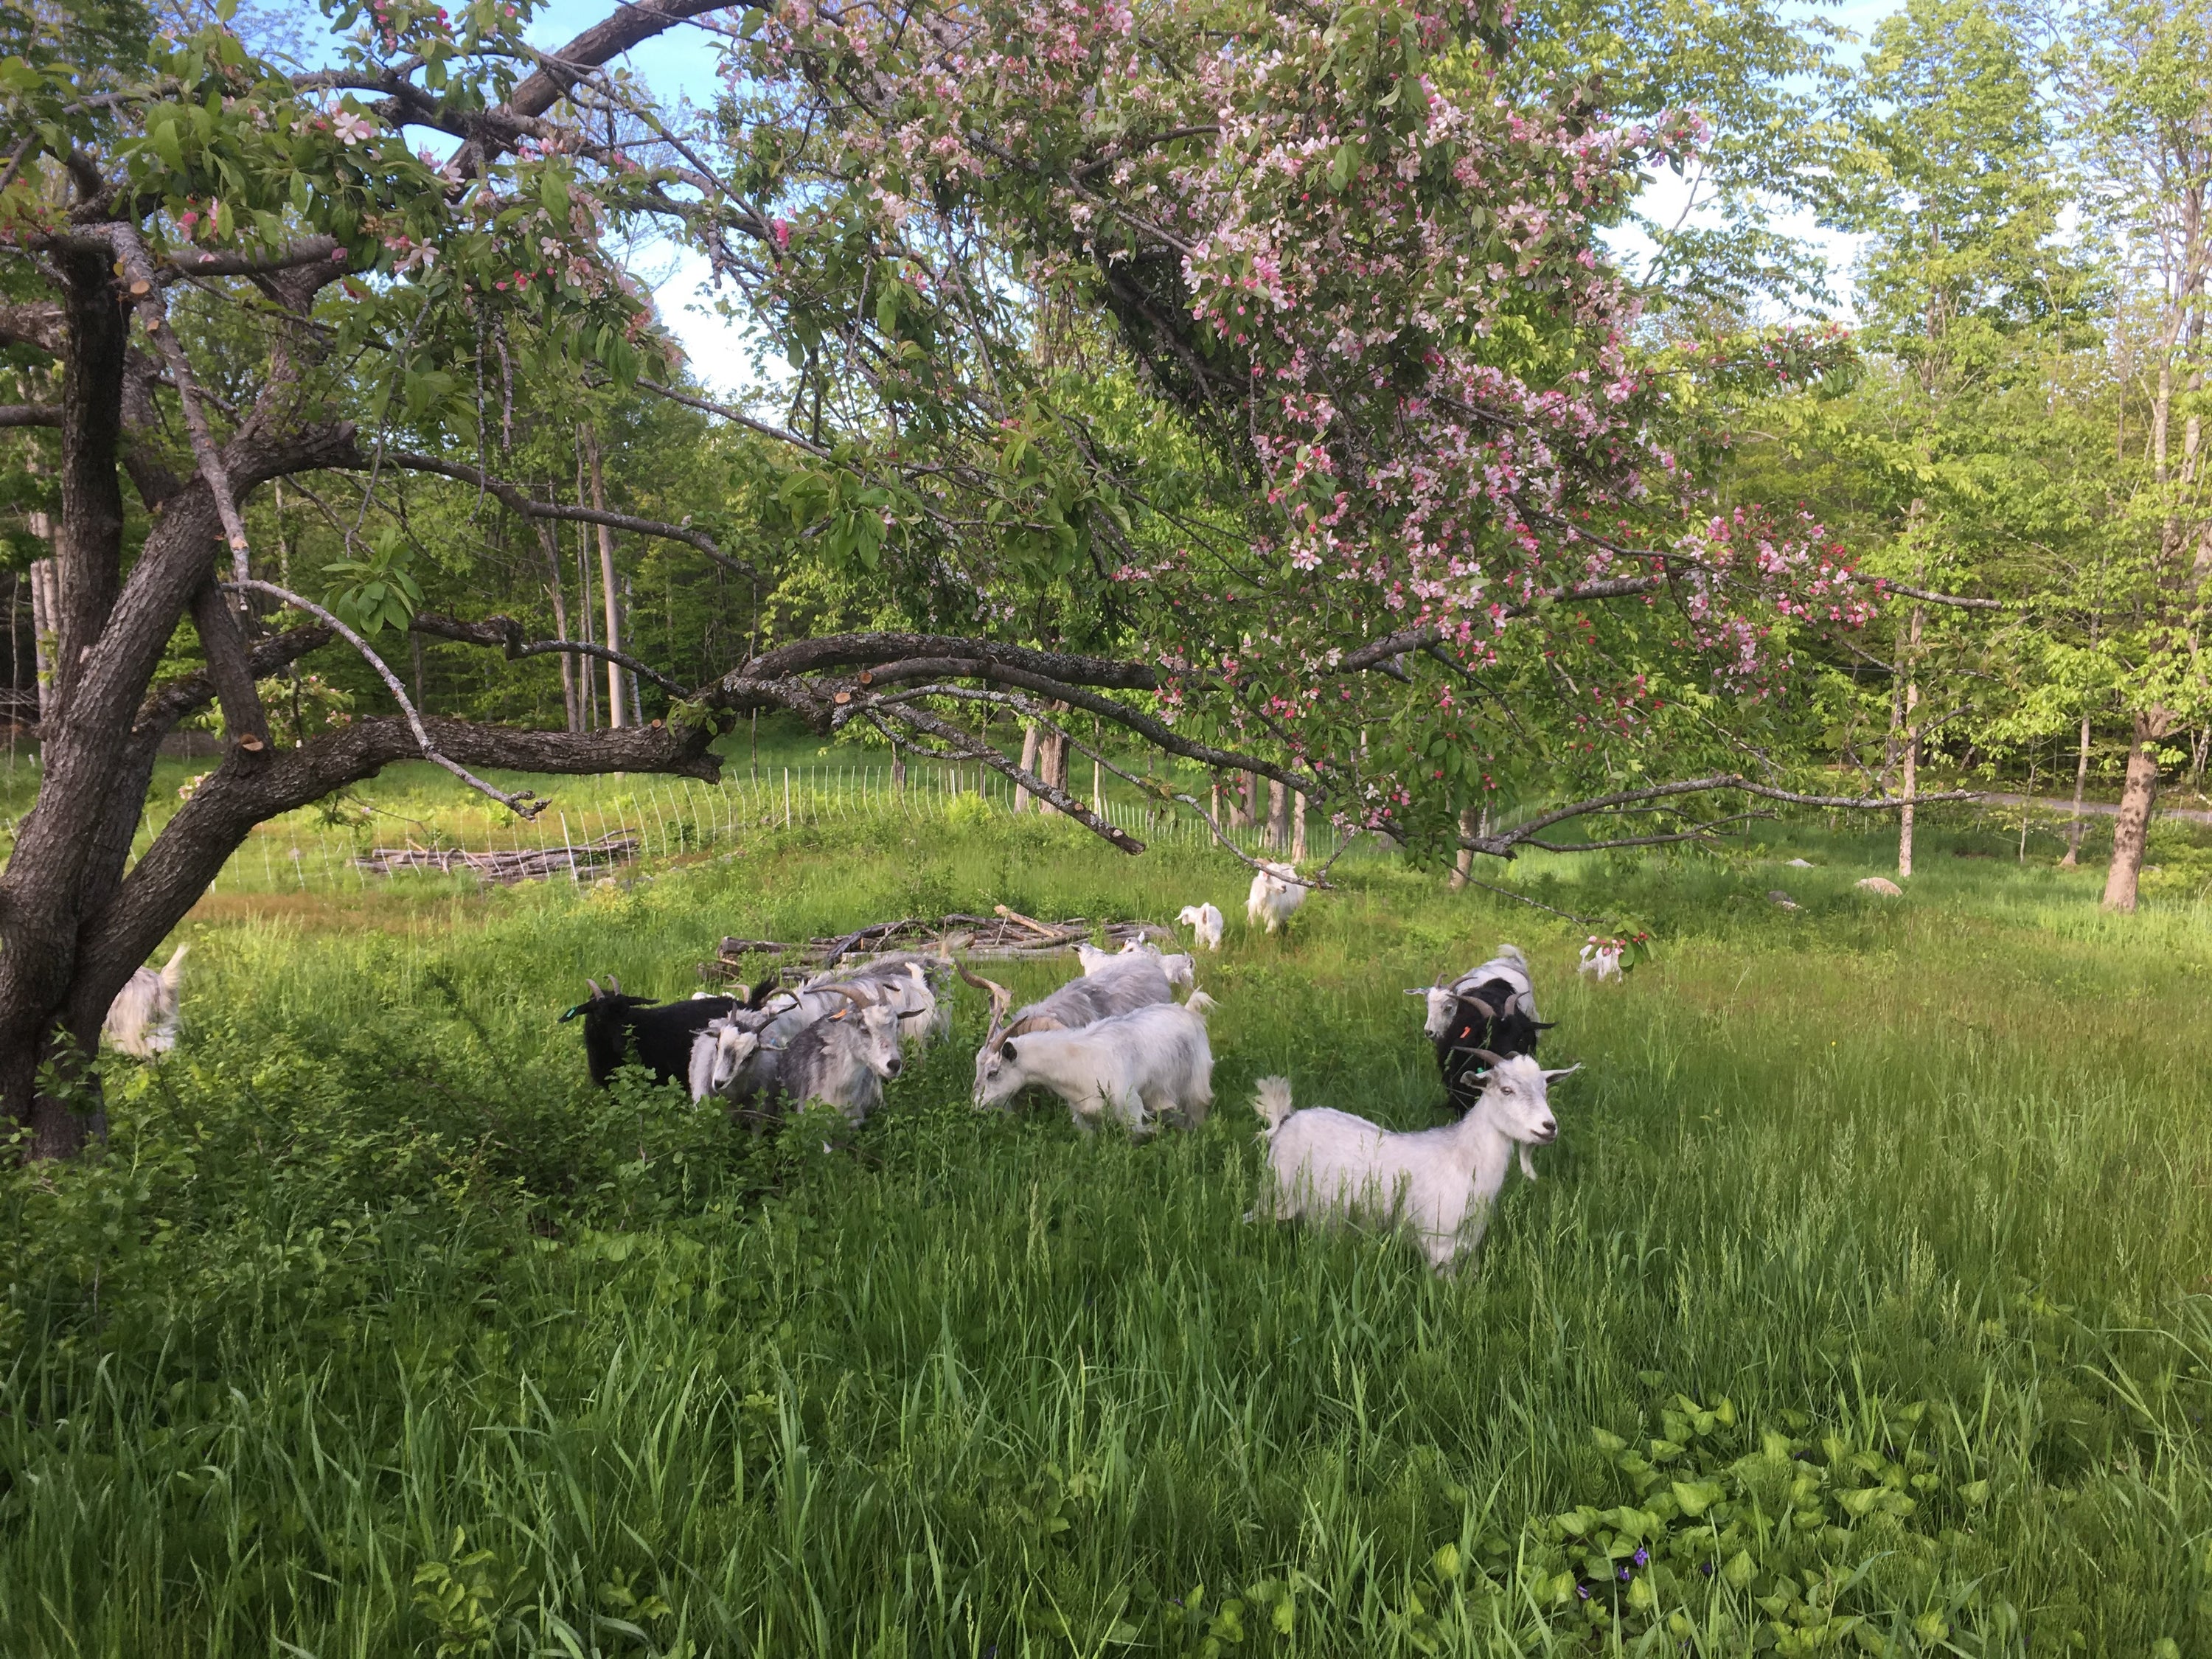 Grass-fed goat